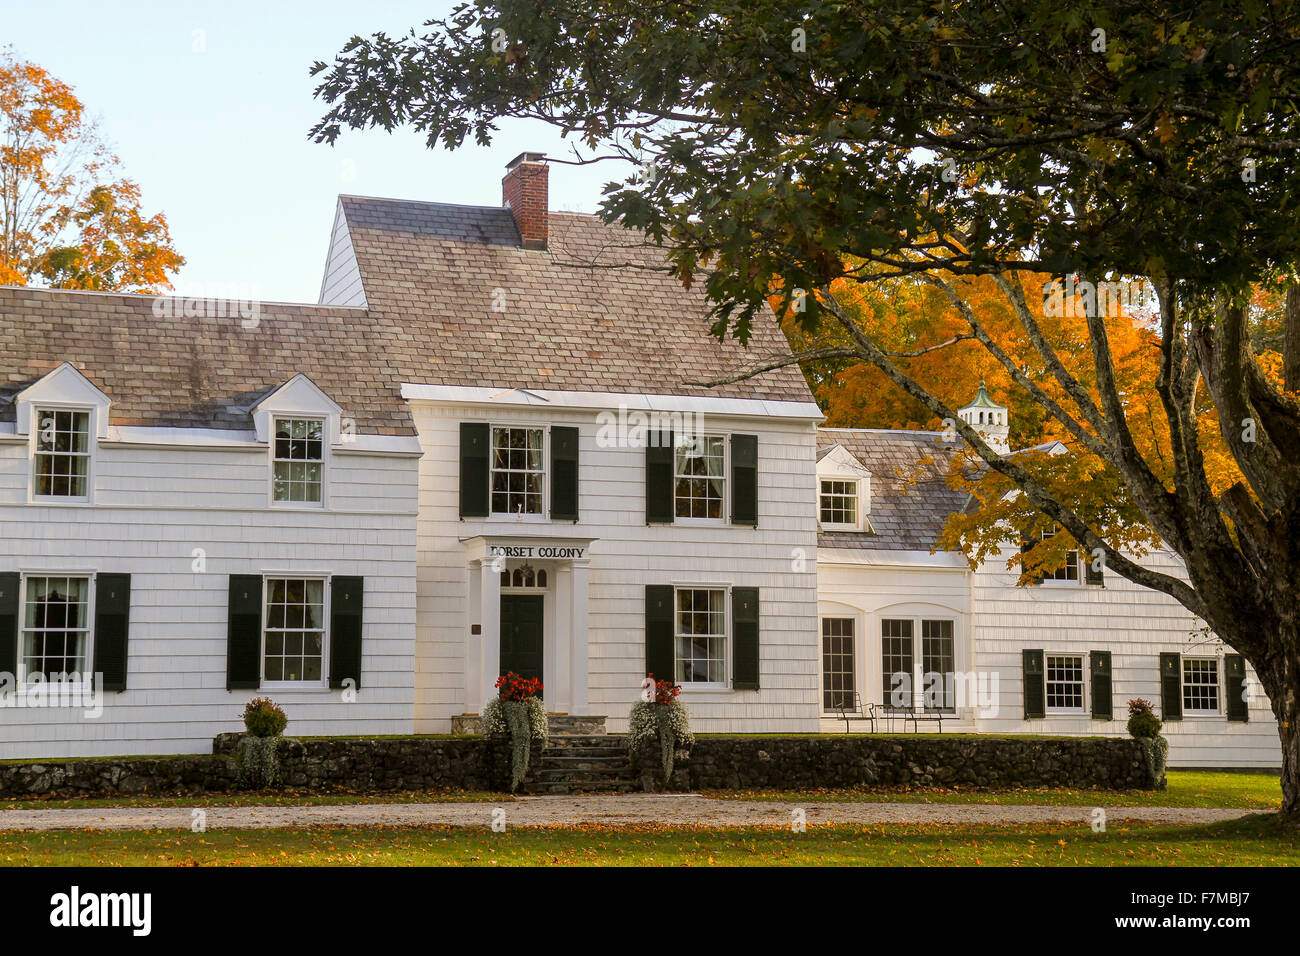 Casa de colonias de Dorset, Dorset, Vermont Foto de stock